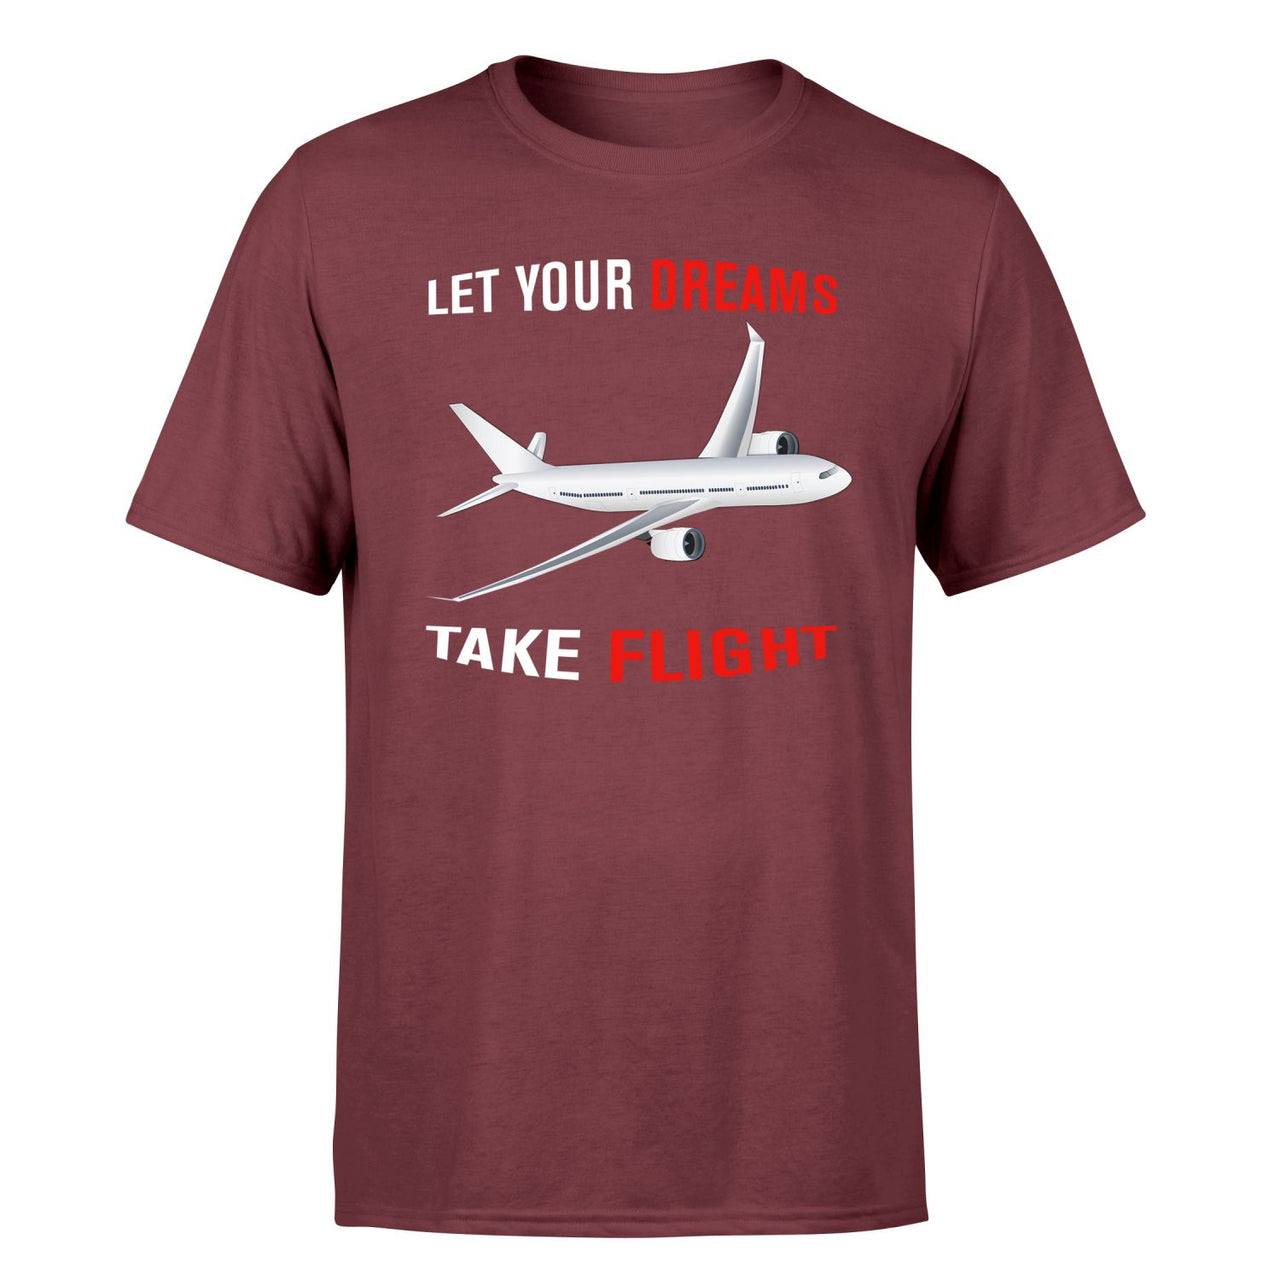 Let Your Dreams Take Flight Designed T-Shirts